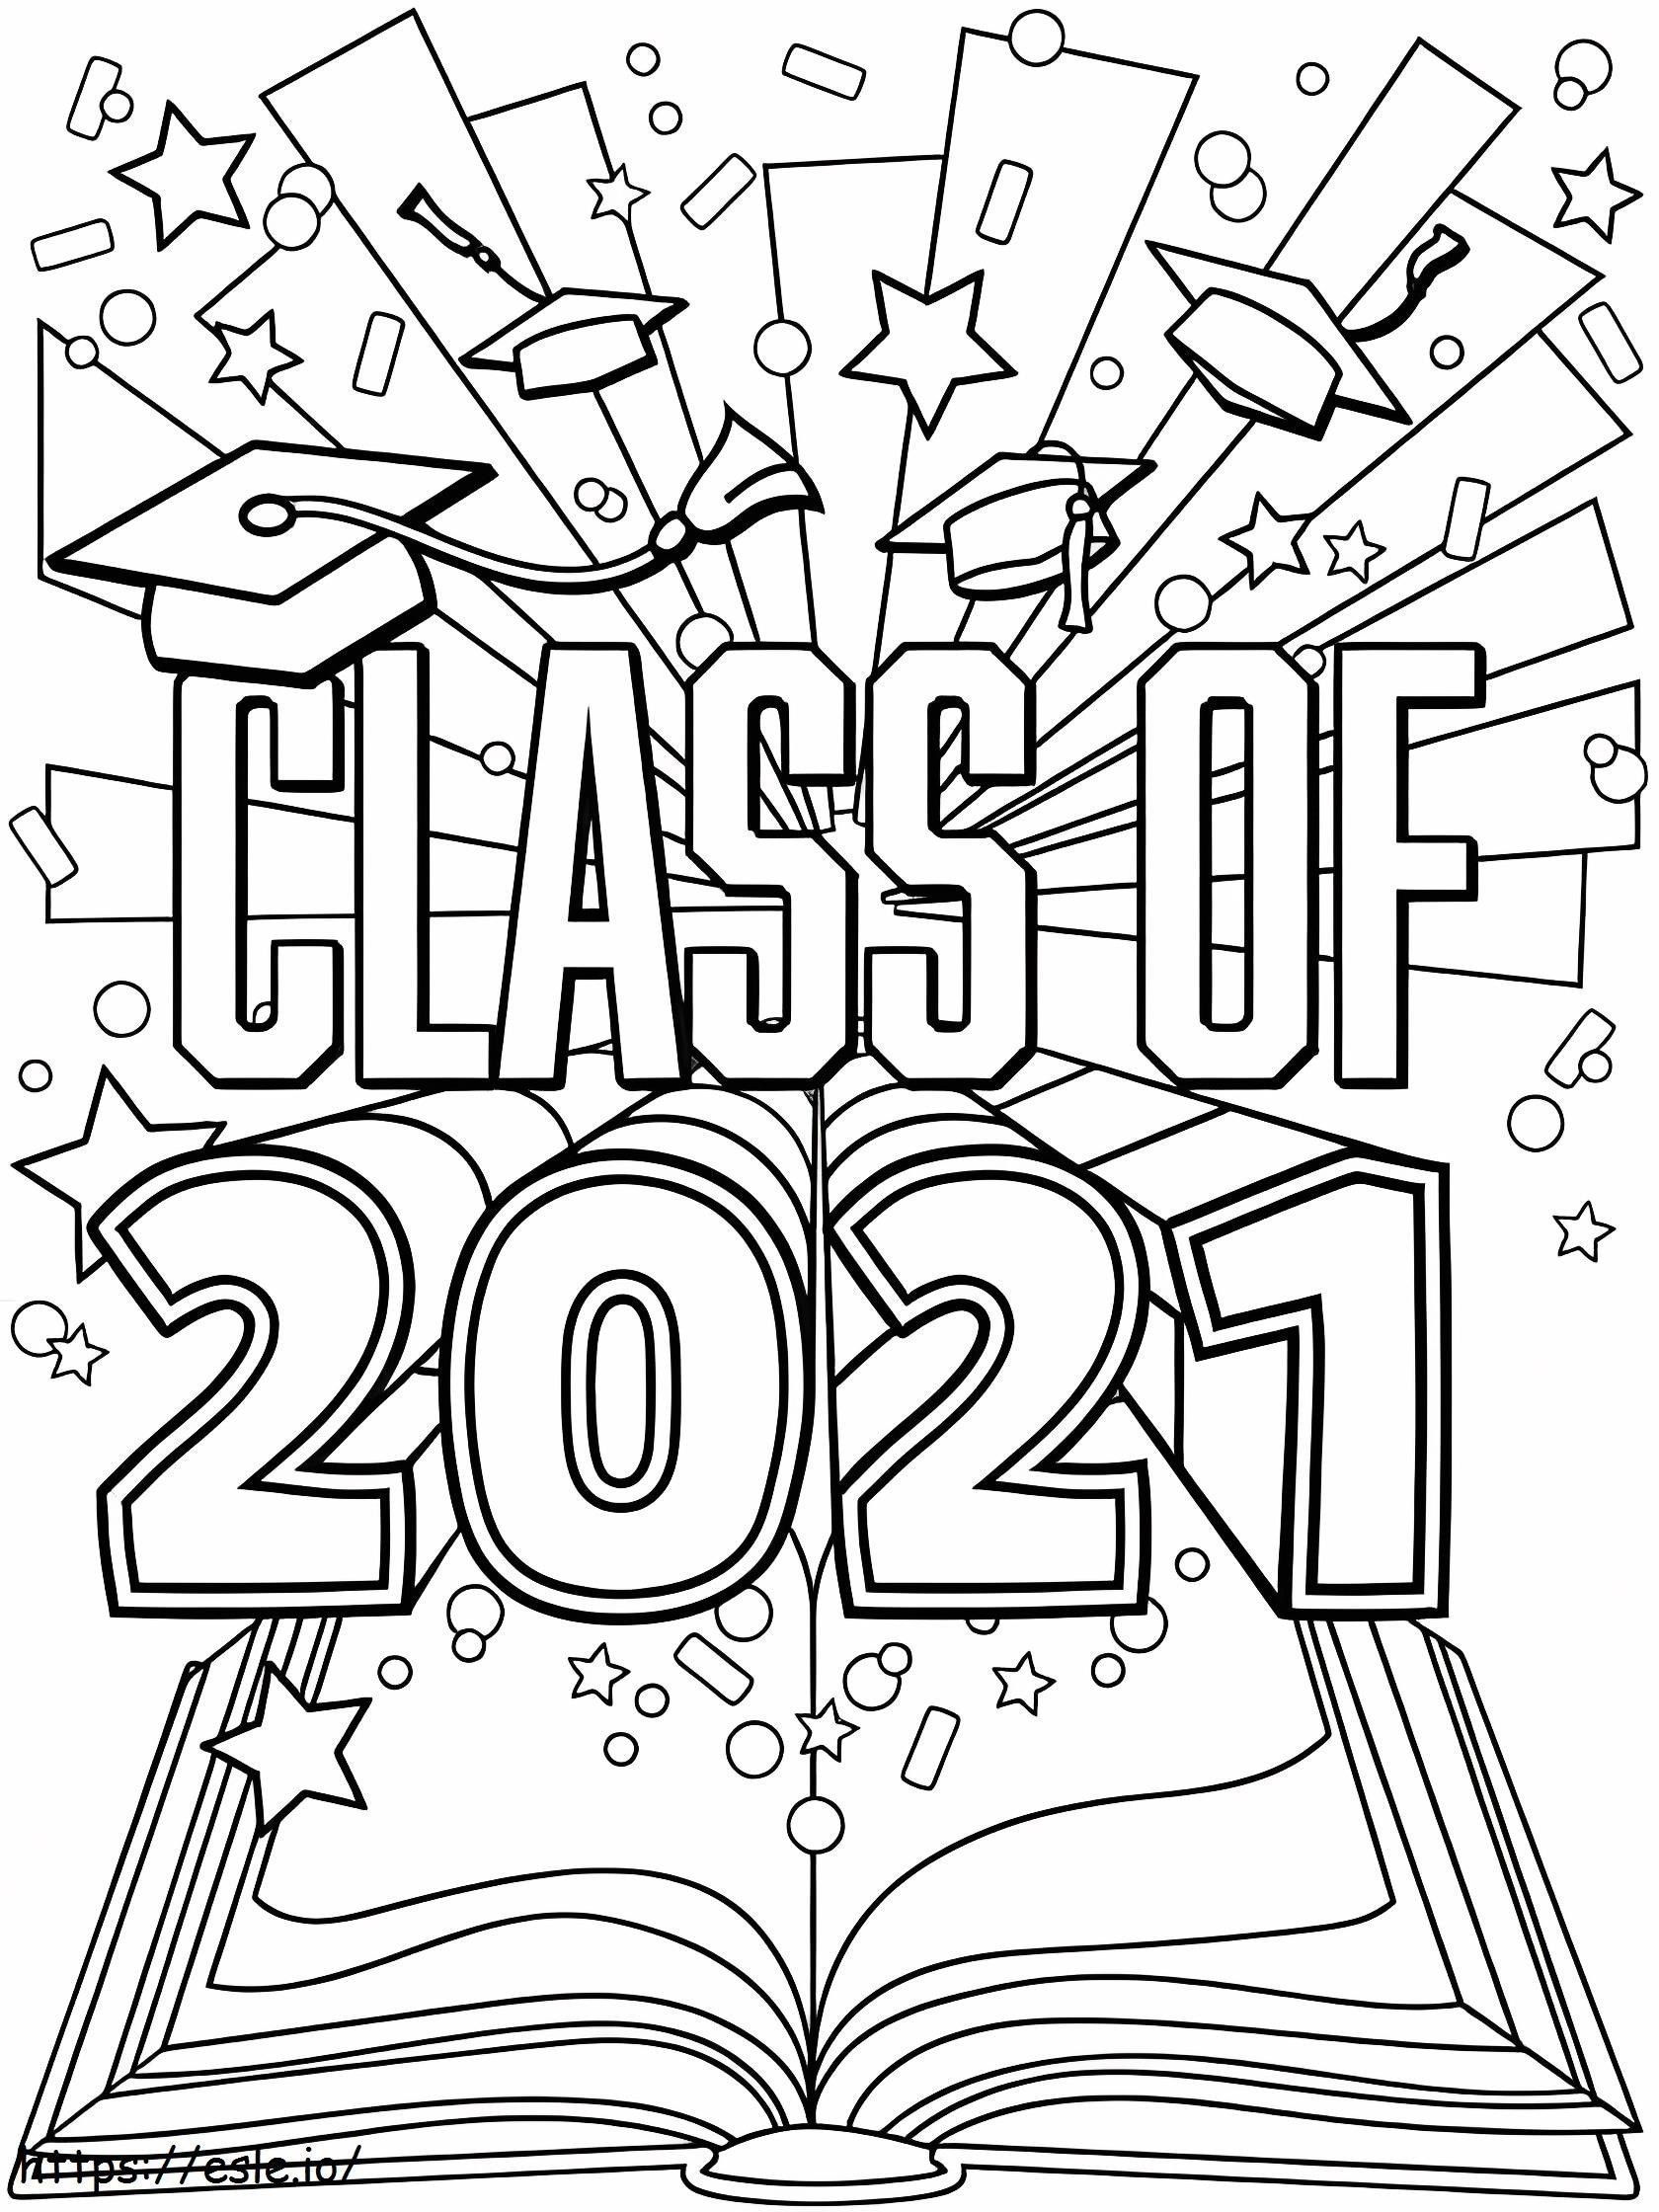 Classe di laurea 2021 da colorare